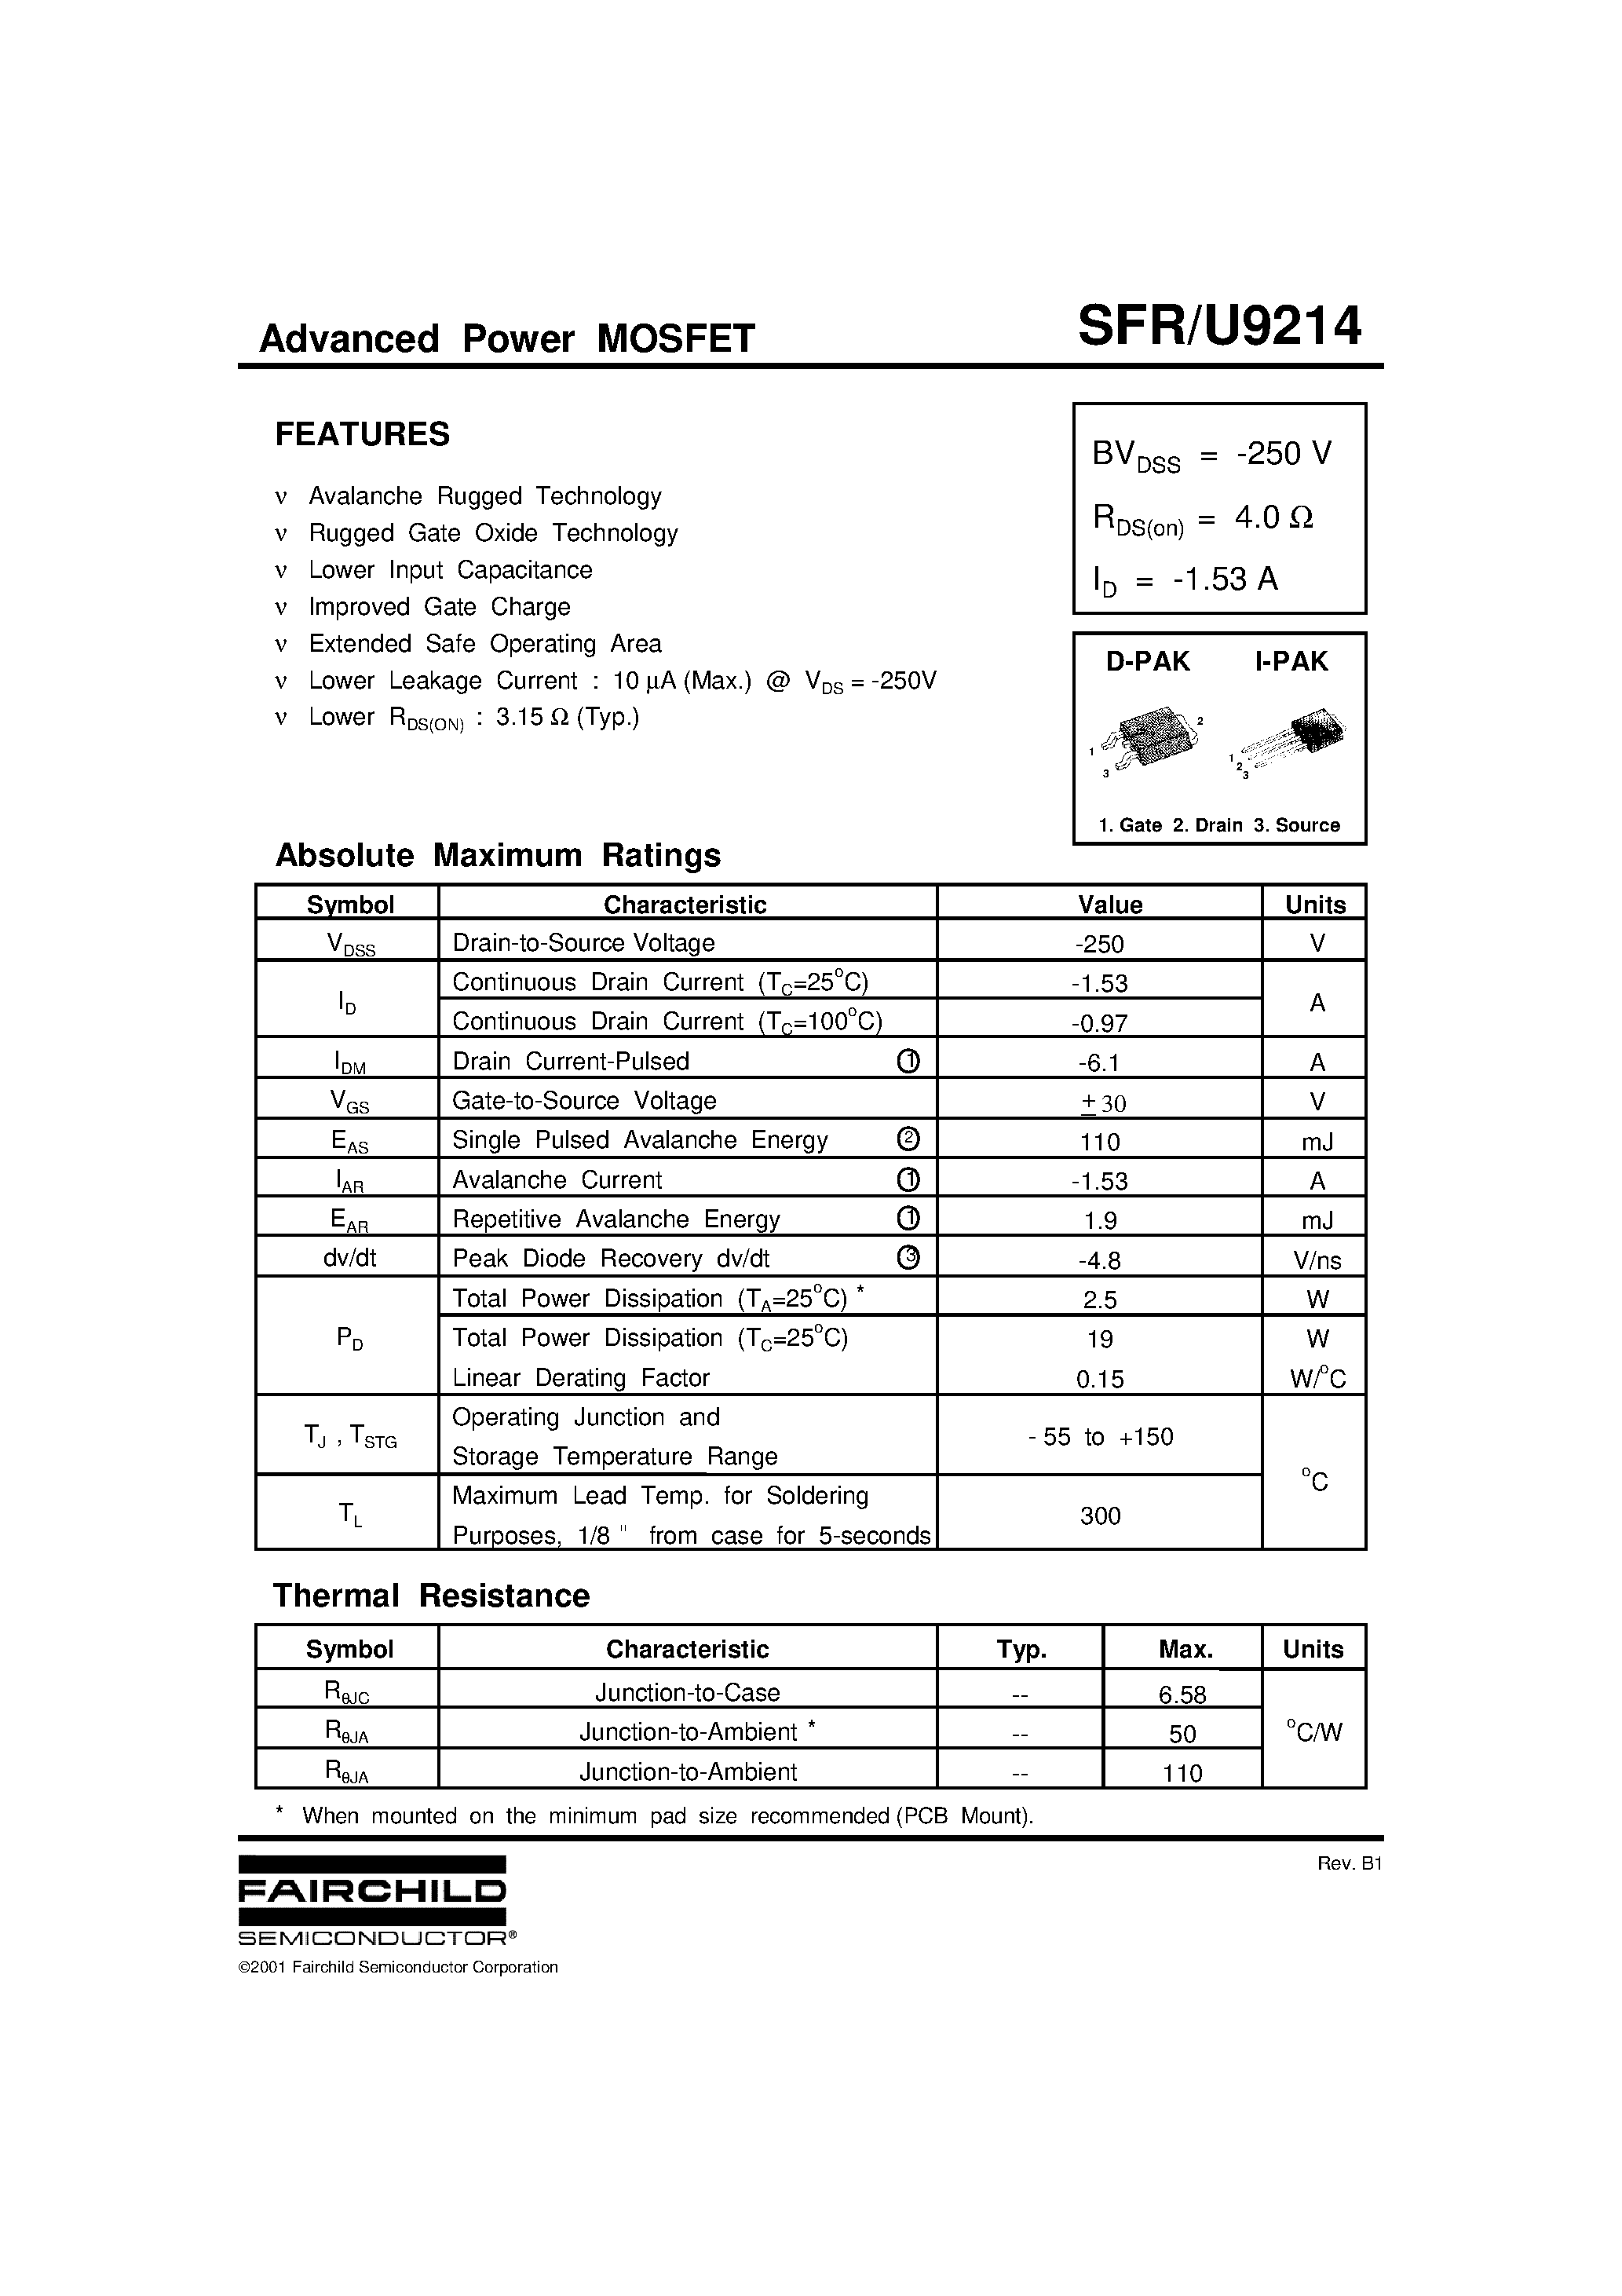 Datasheet SFR/U9214 - Advanced Power MOSFET page 1